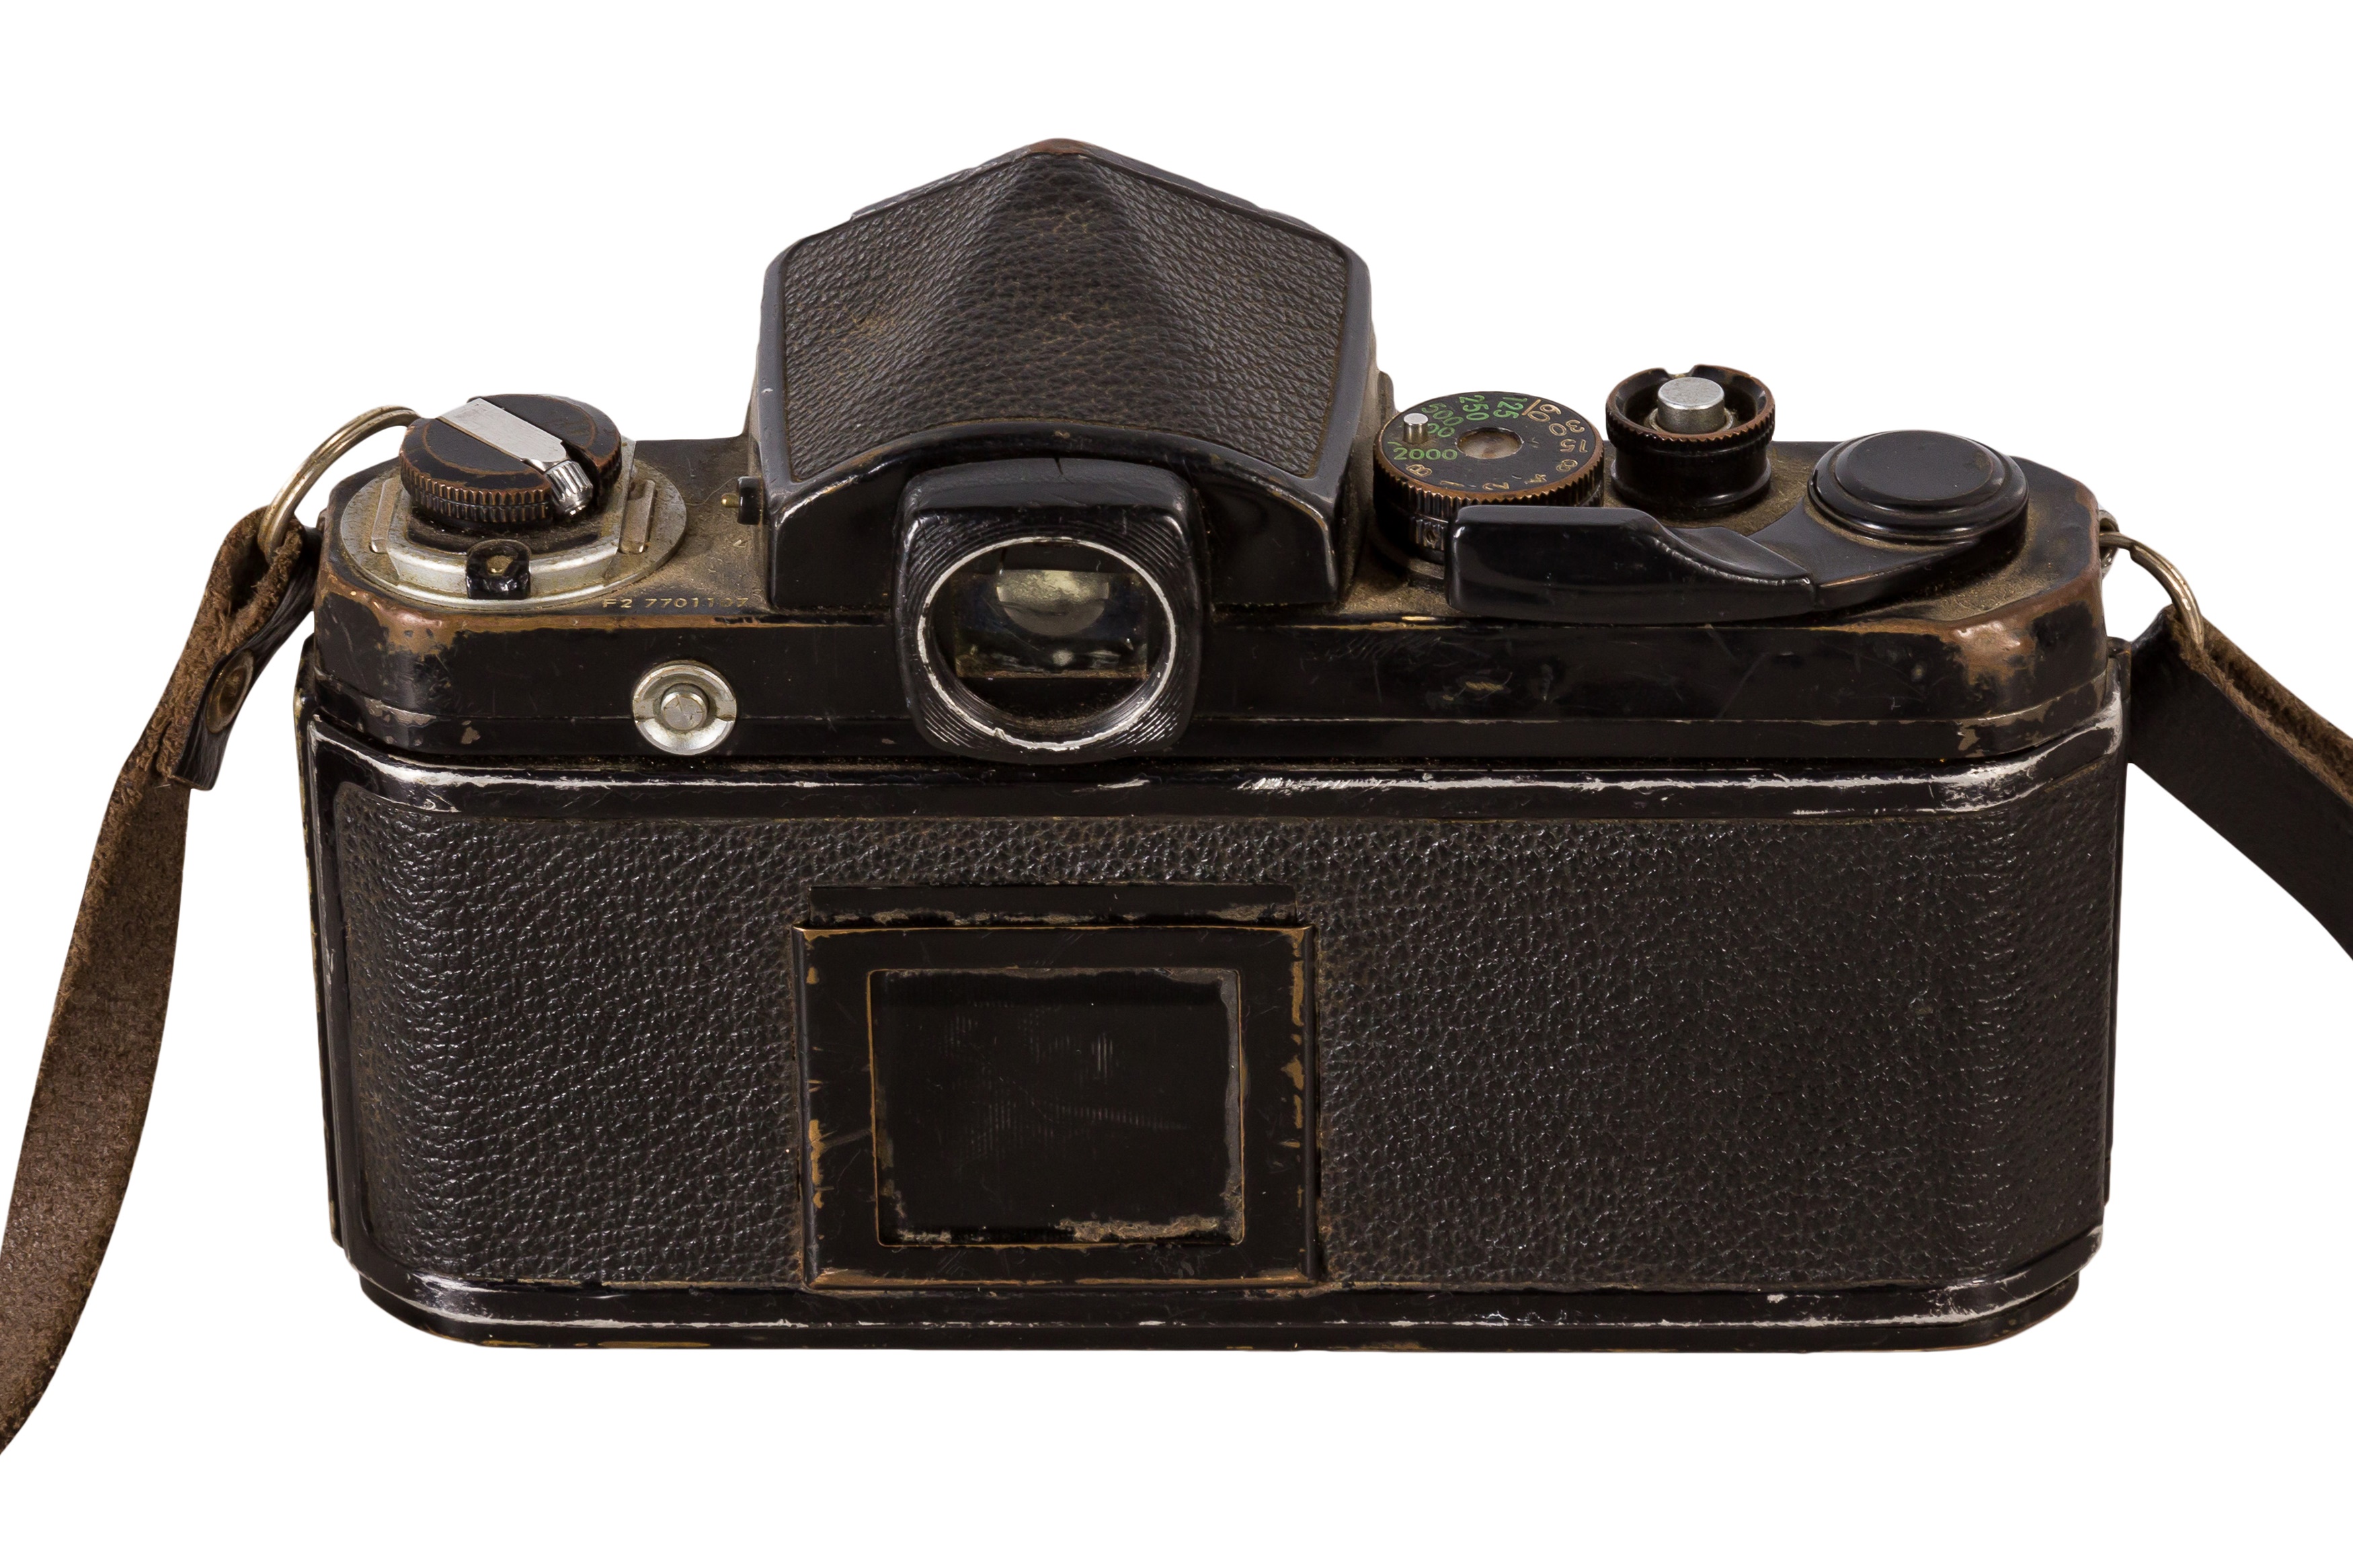 A Nikon F2 SLR Camera - Image 2 of 3